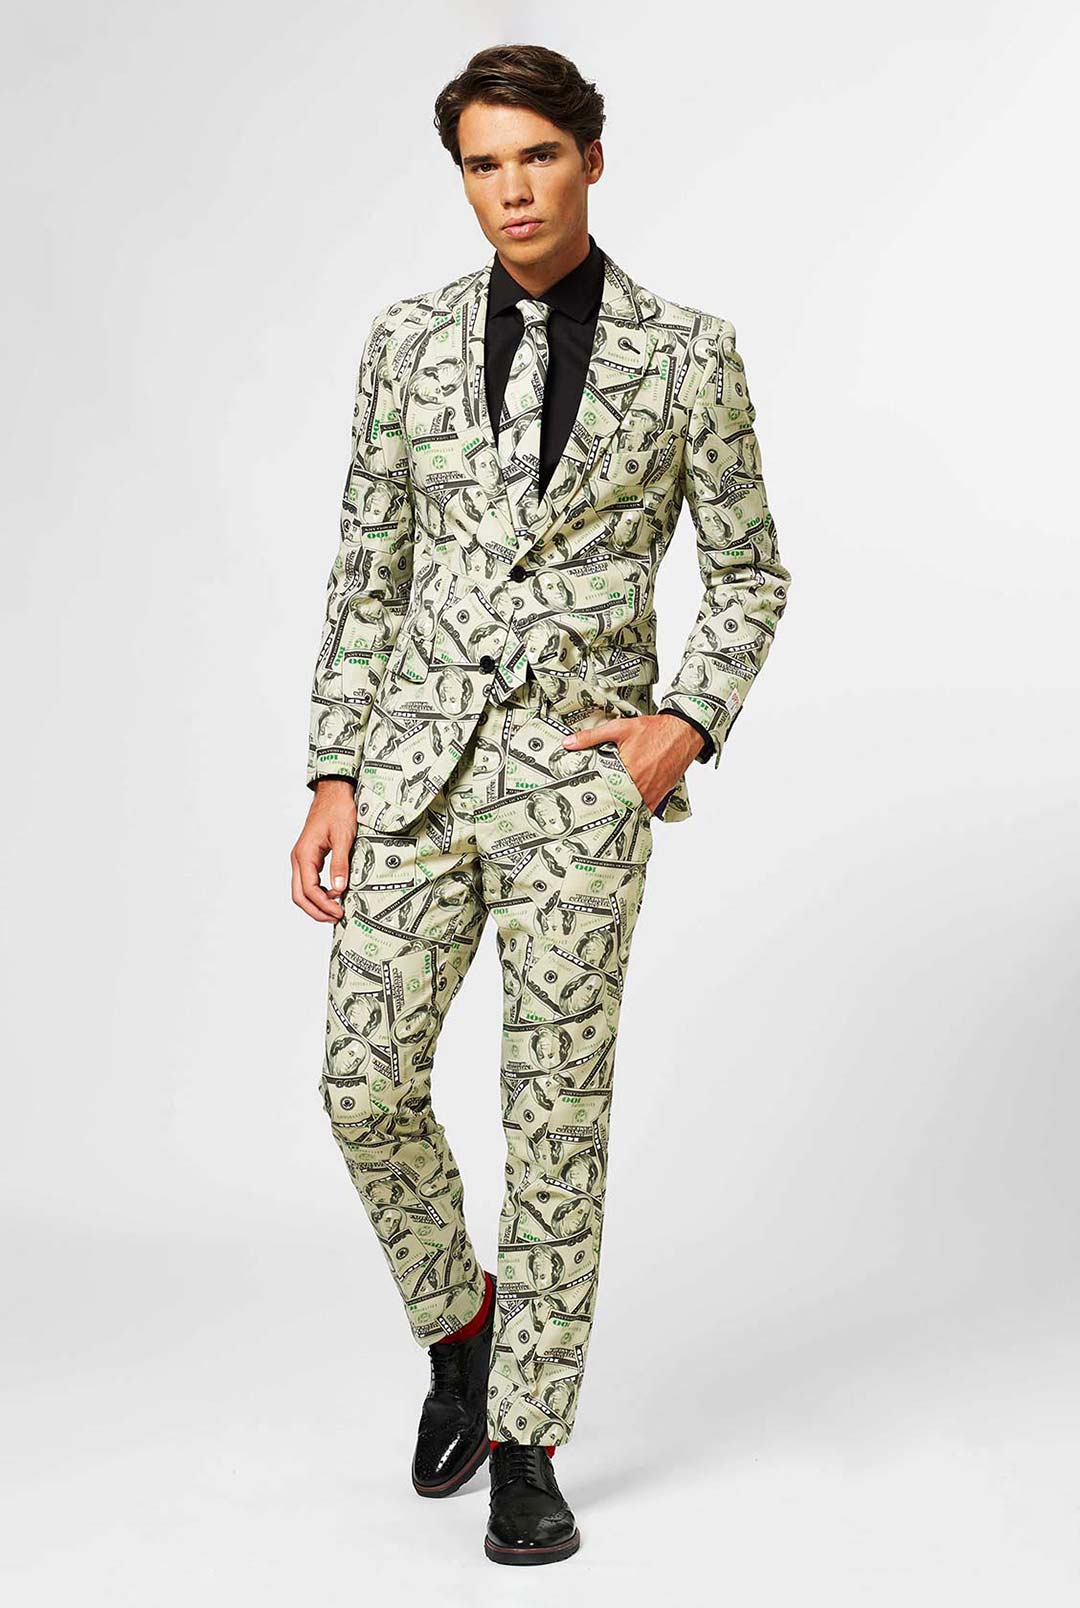 Cashanova, Money Suit, Dollar Suit